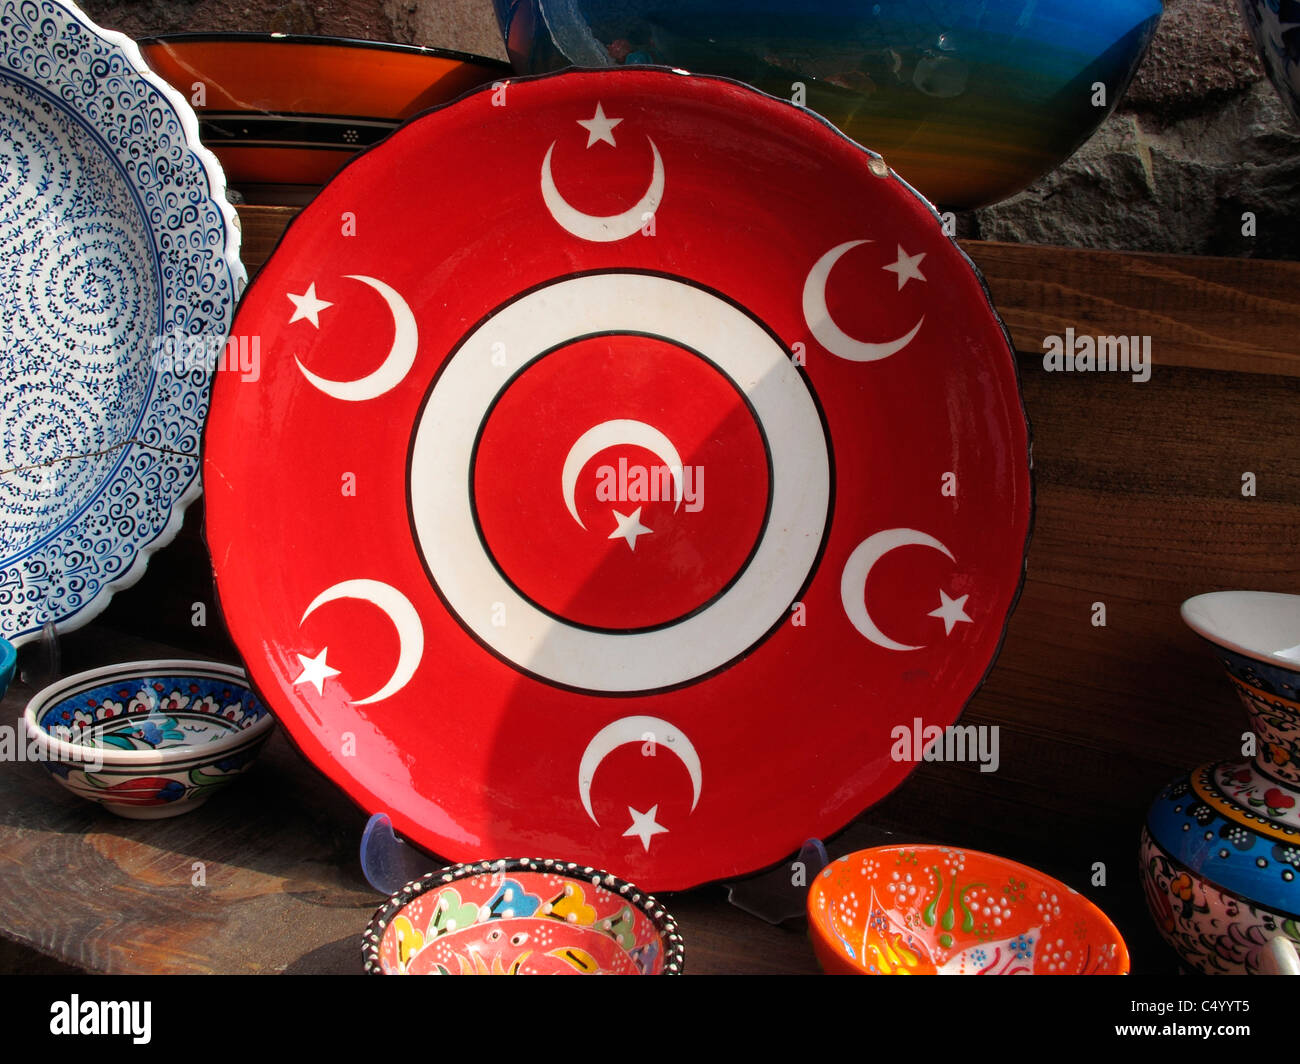 Turkey Istanbul Sultanahmet old town ceramic souvenirs Stock Photo